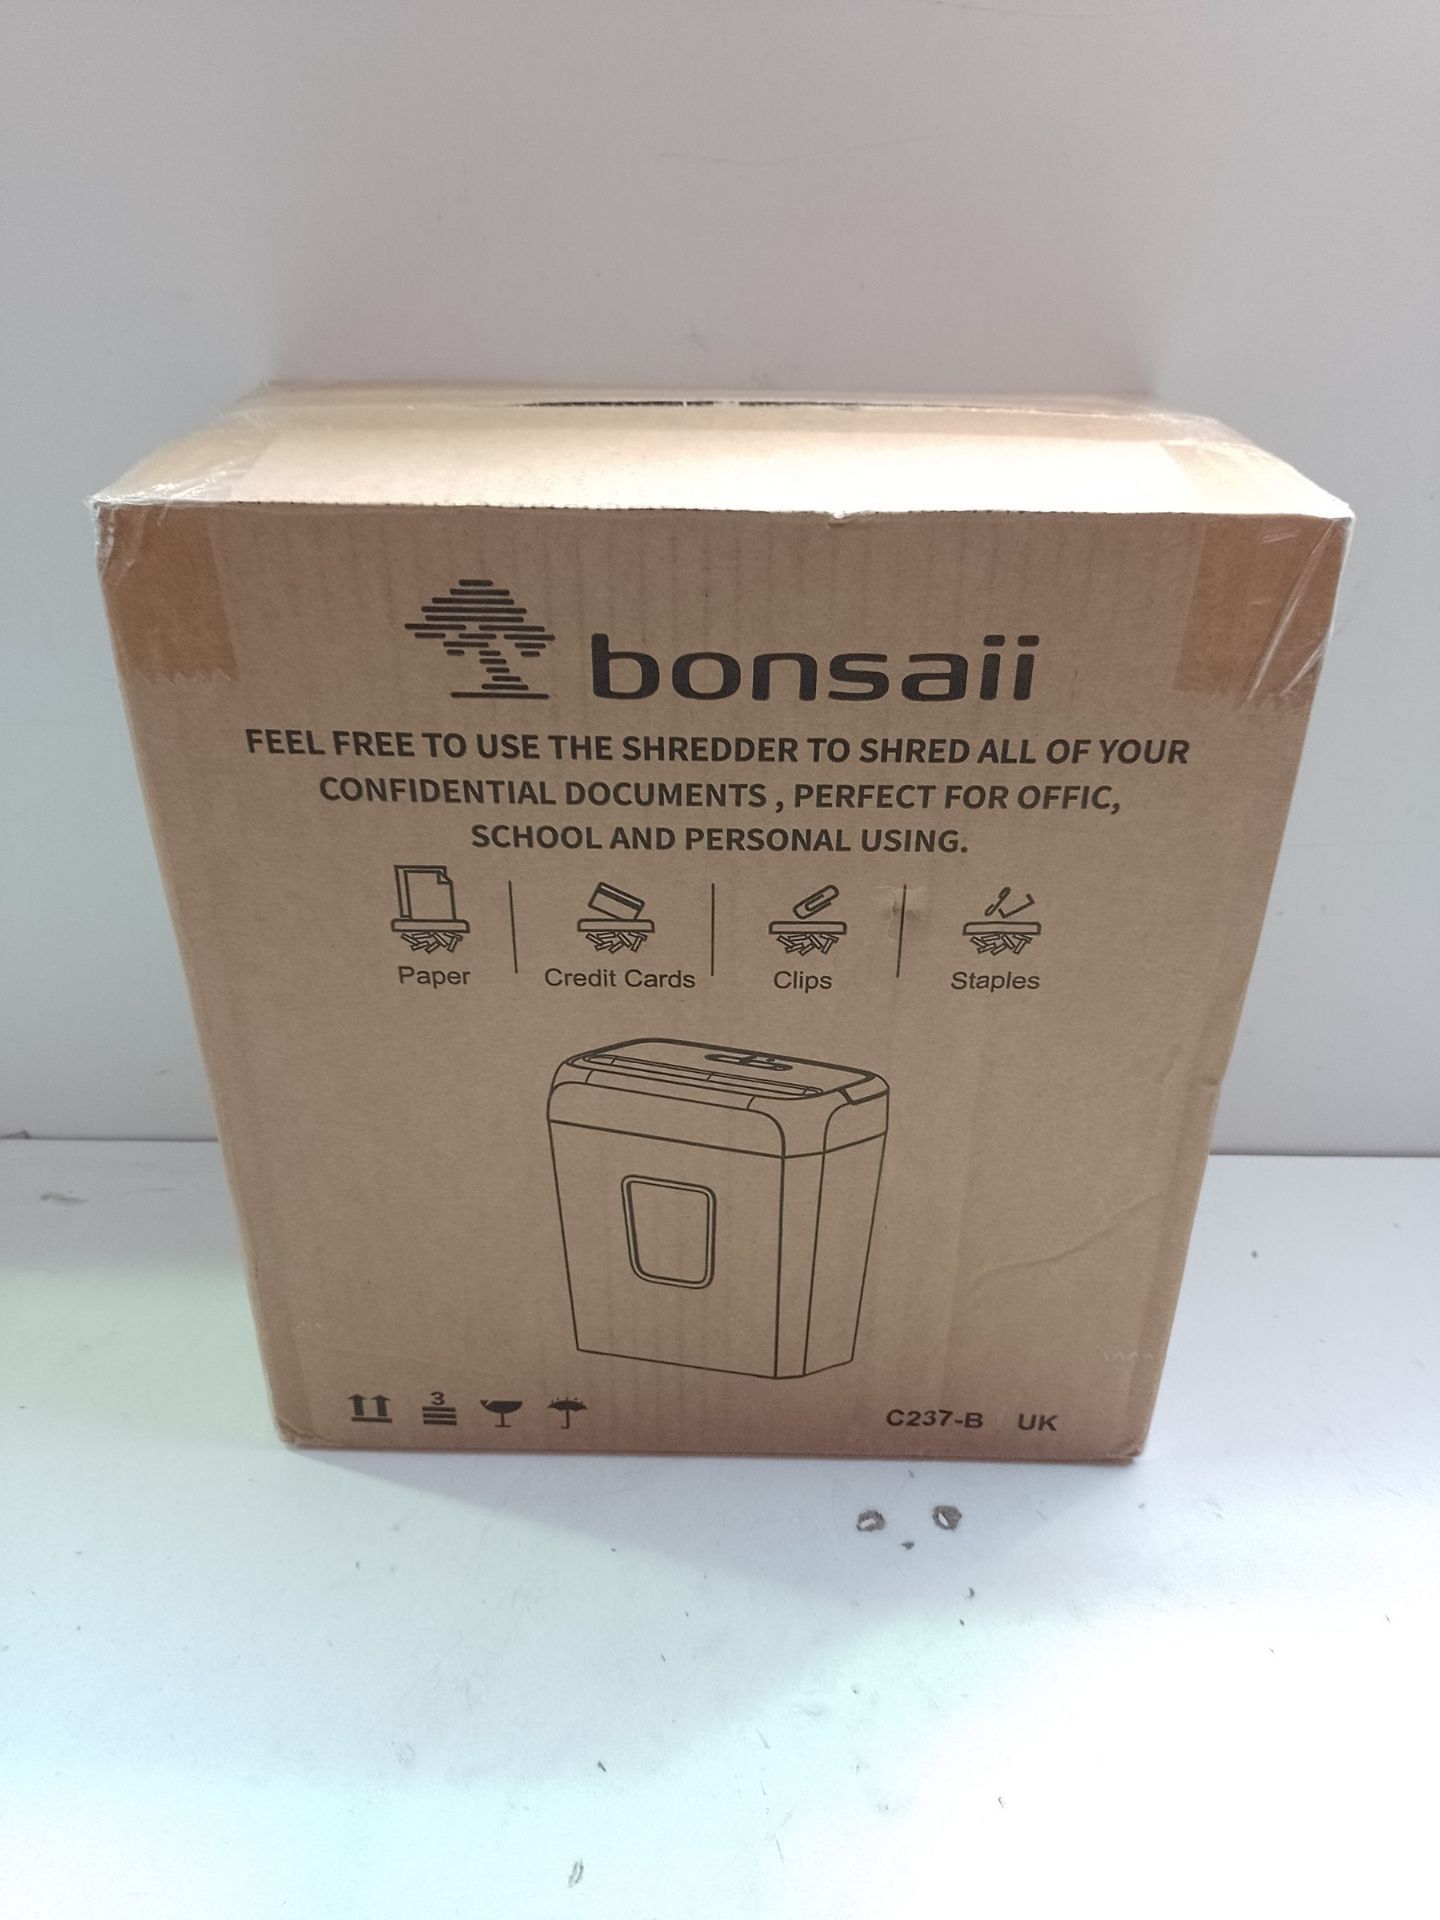 RRP £32.02 Bonsaii Paper Shredder for Home Use - Image 2 of 2